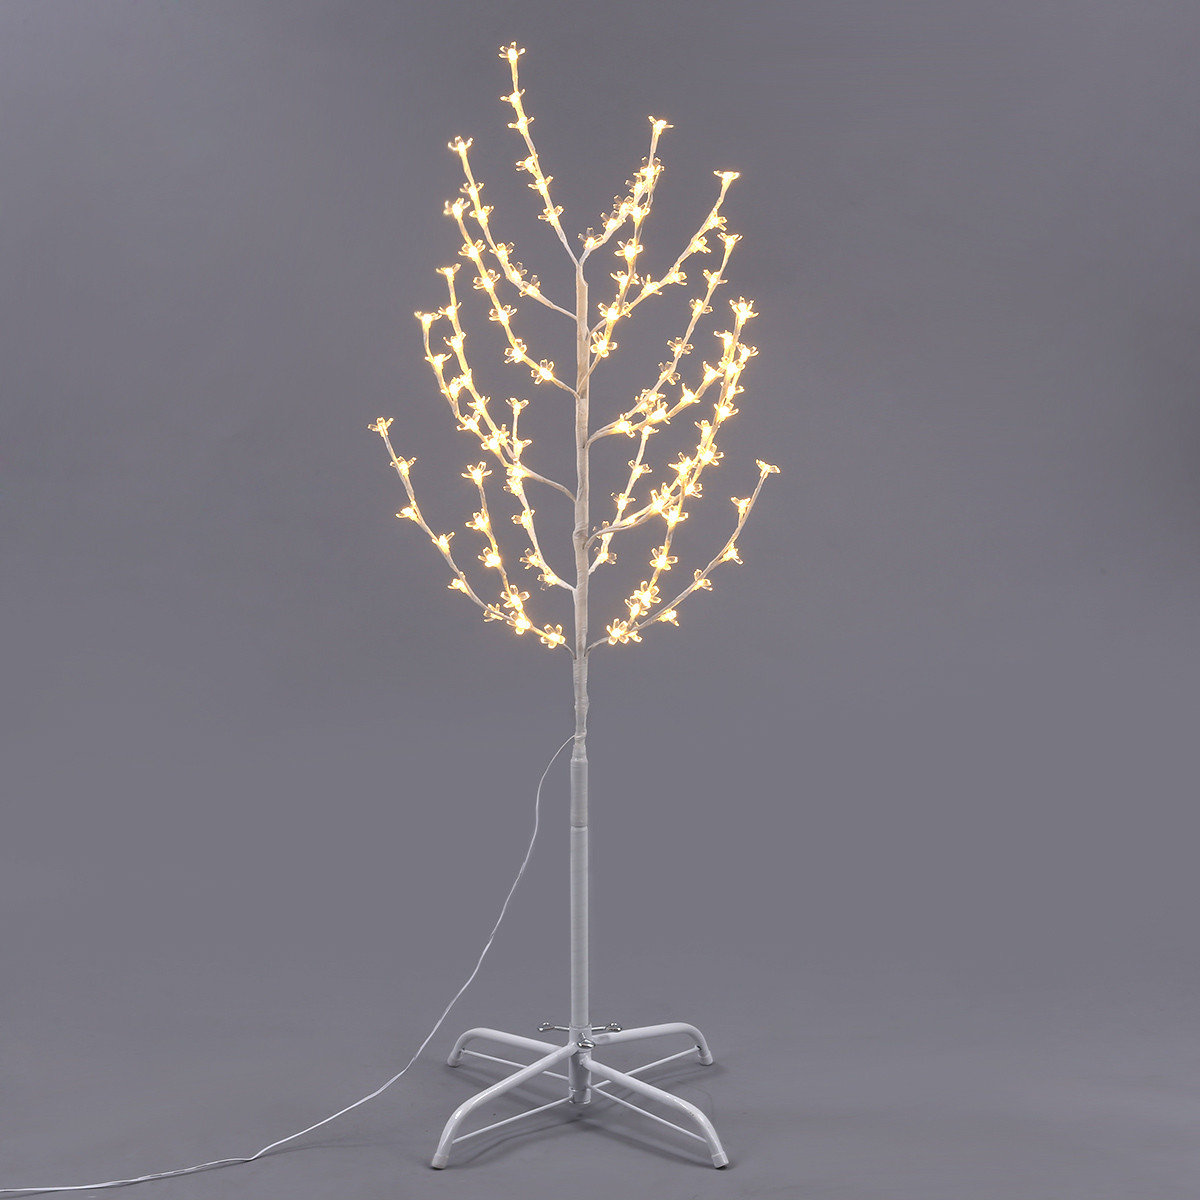 White Indoor Christmas Lights
 Waterproof LED Christmas Light Tree Lights Warm White Home